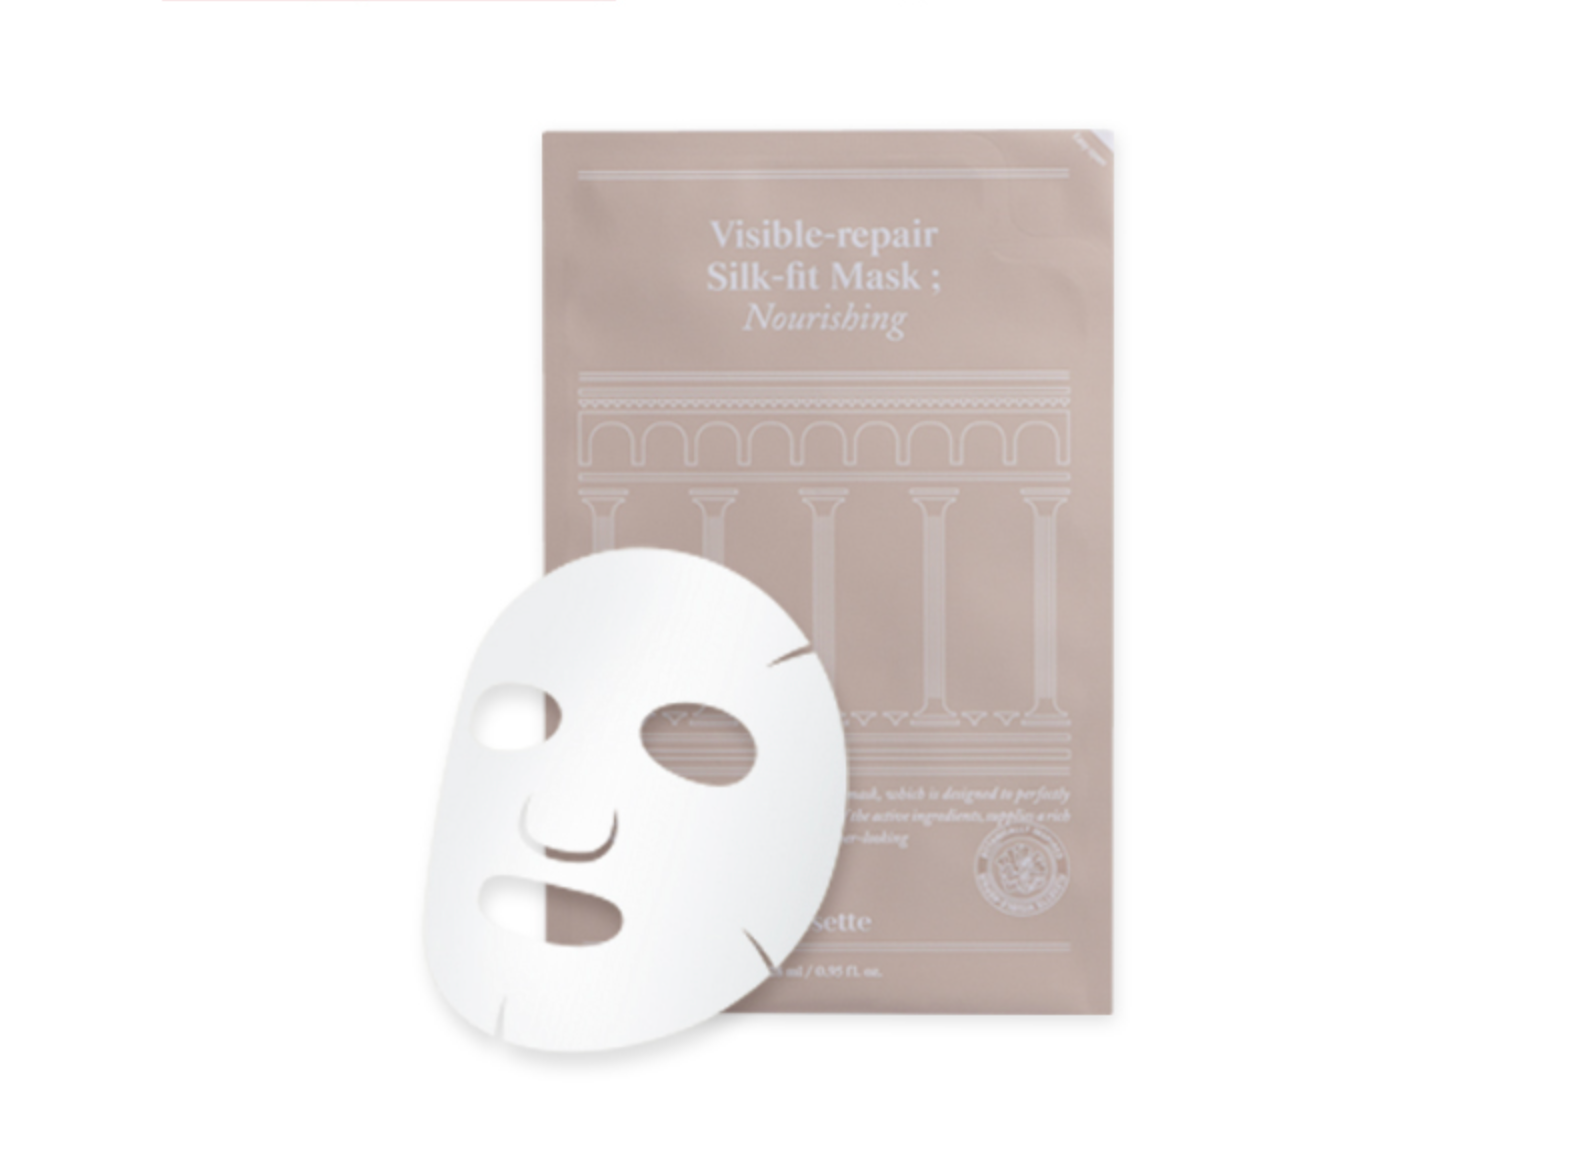 FLESETTE	Visible Repair Silk-fit Mask;Nourishing